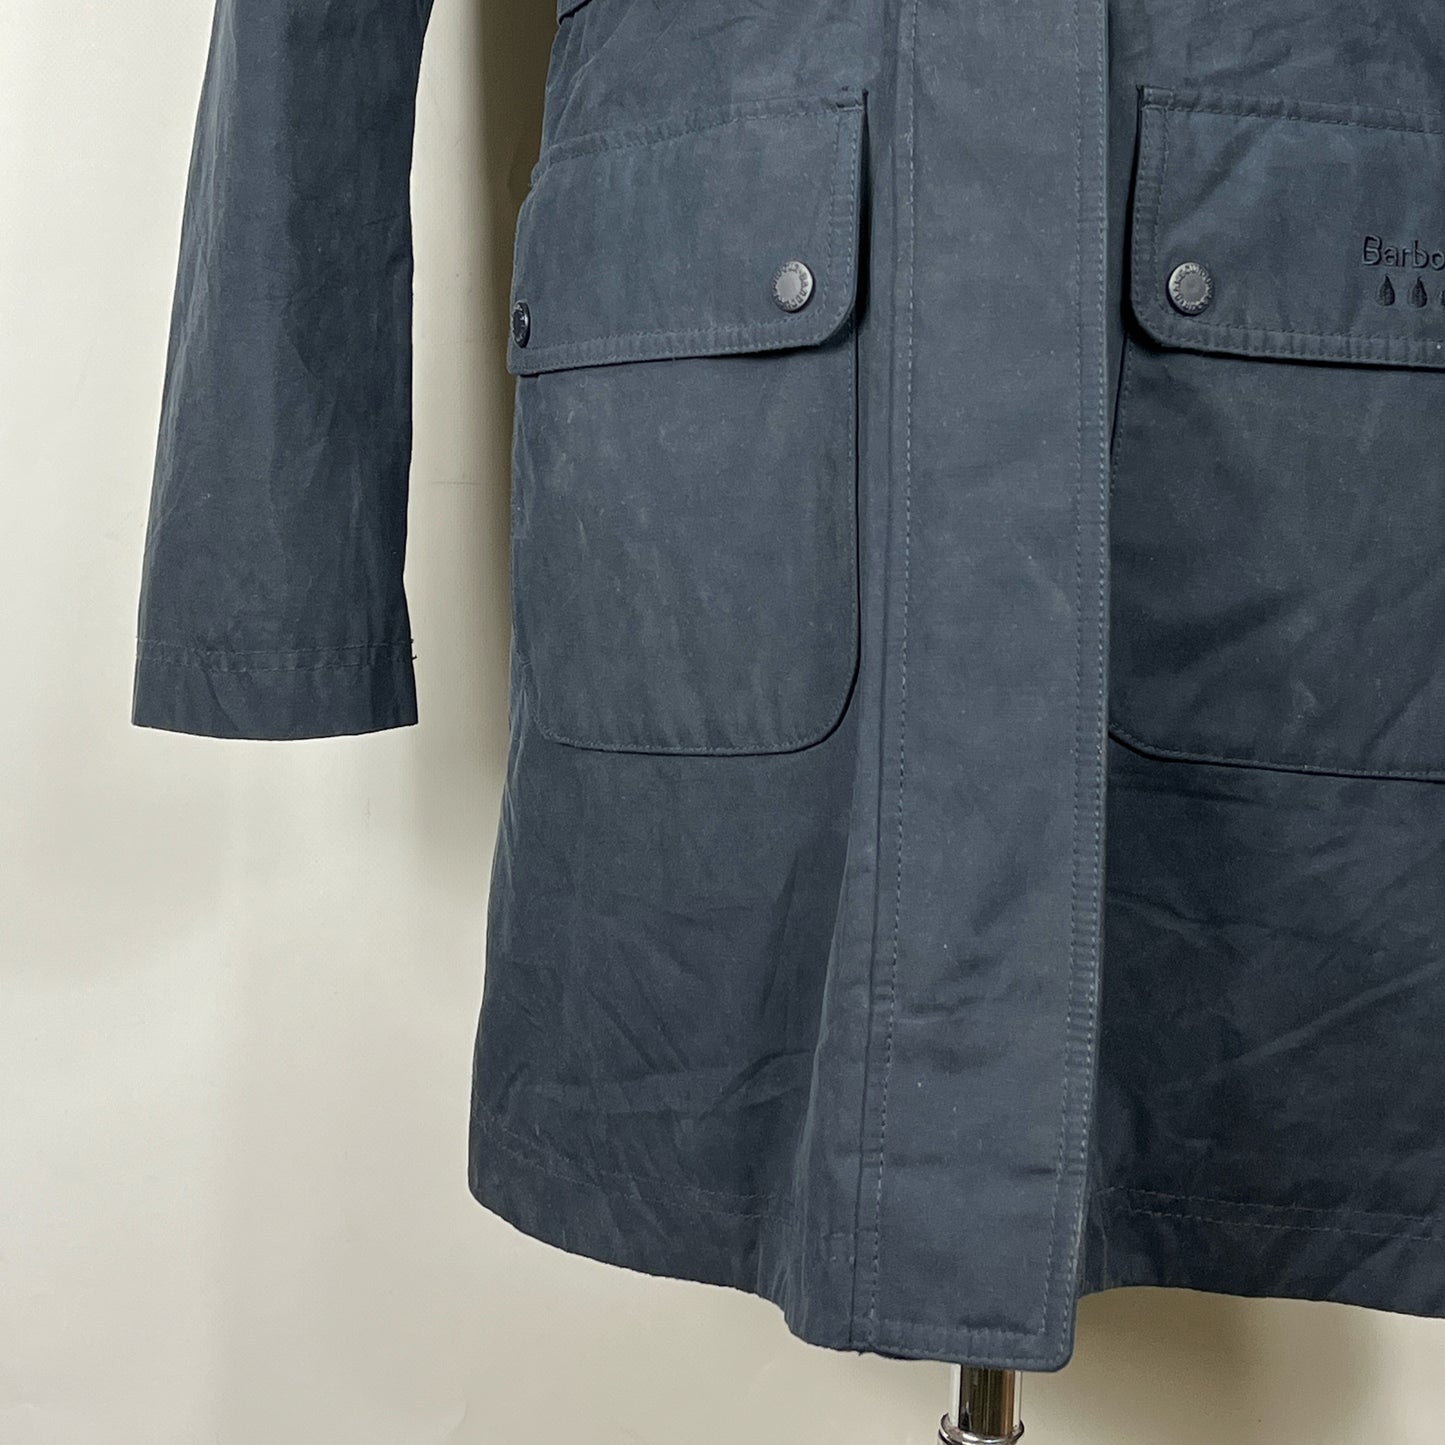 Giacca Barbour da donna blu con cappuccio Uk8 Xsmall- Navy waterproof jacket UK8